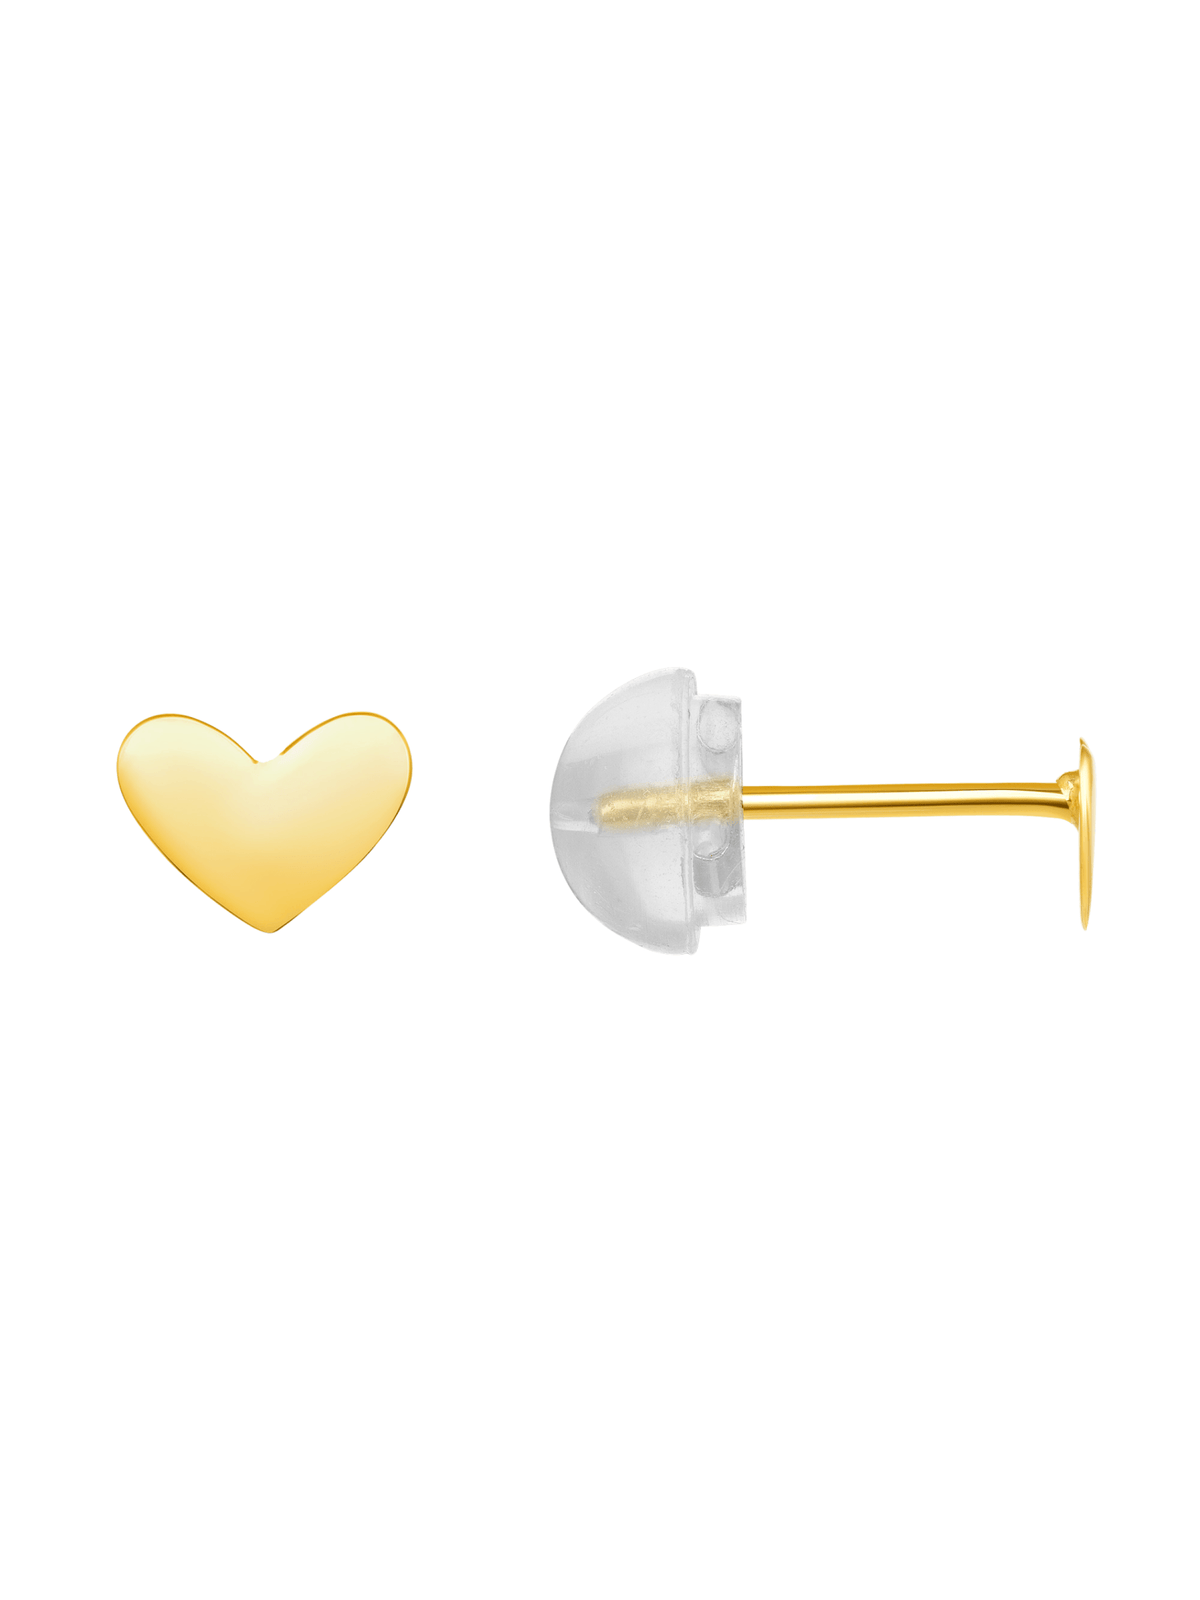 Gold heart earrings studs on white background